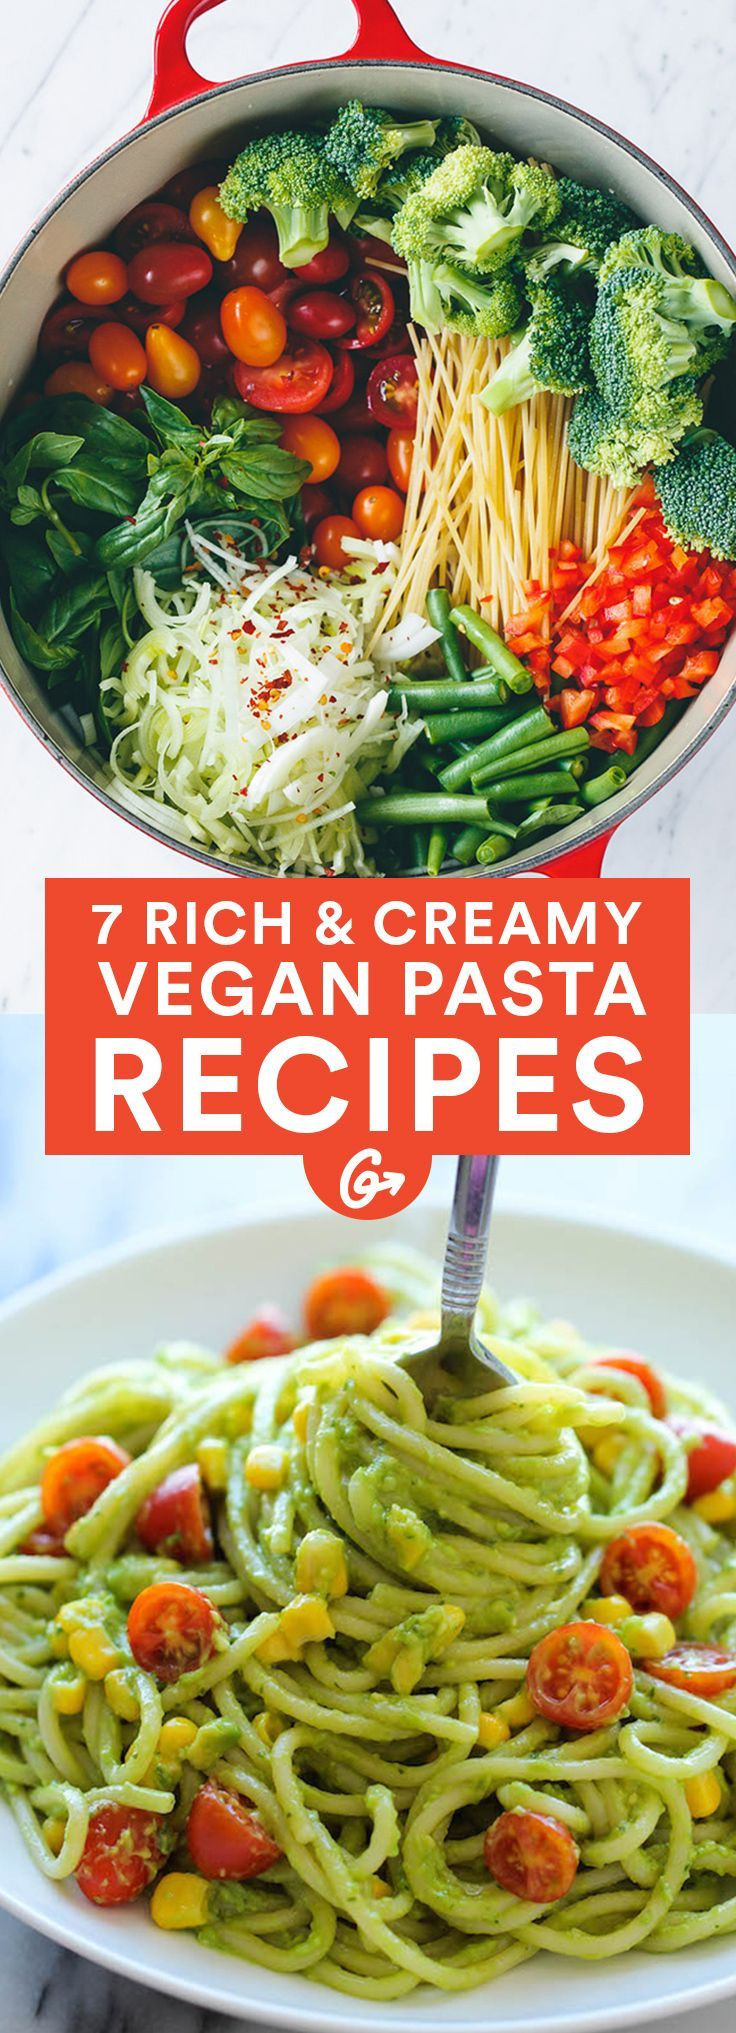 Healthy Vegan Pasta Recipes
 Best 25 Healthy pasta sauces ideas on Pinterest